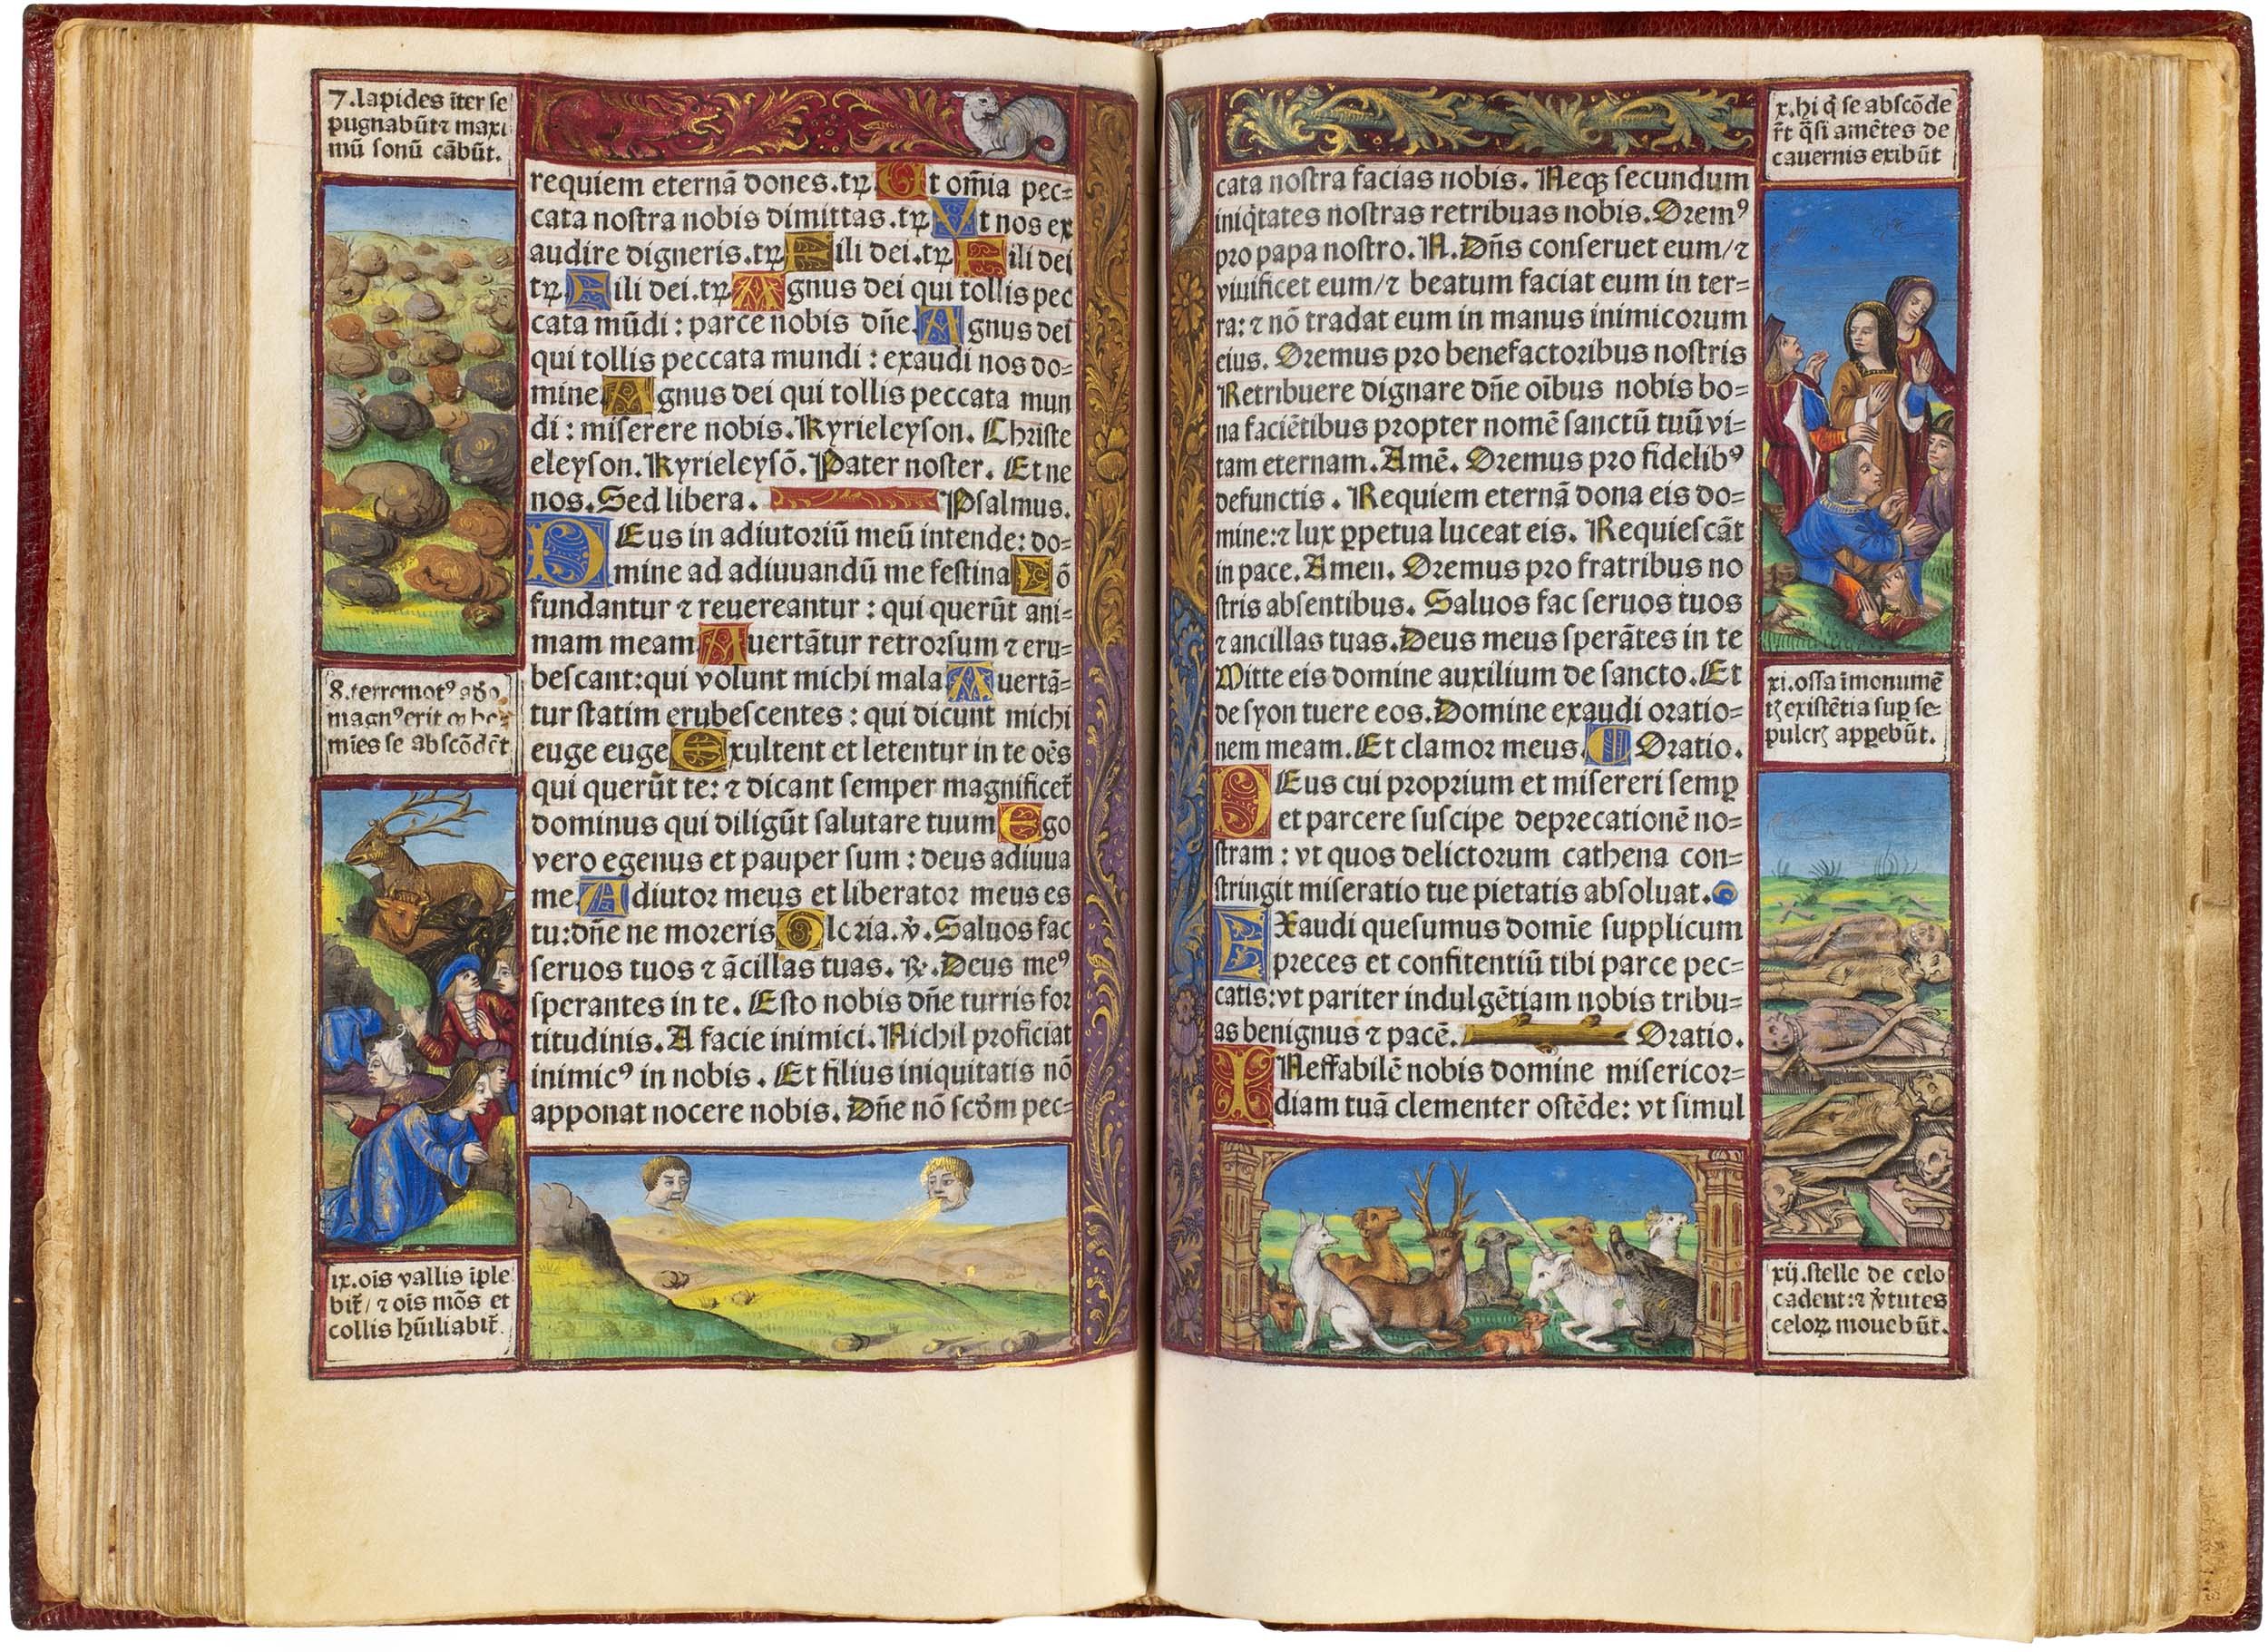 Horae-bmv-book-of-hours-Louis-XII-martainville-master-philippa-guelders-paris-pigouchet-vostre-15.10.1499-58.jpg